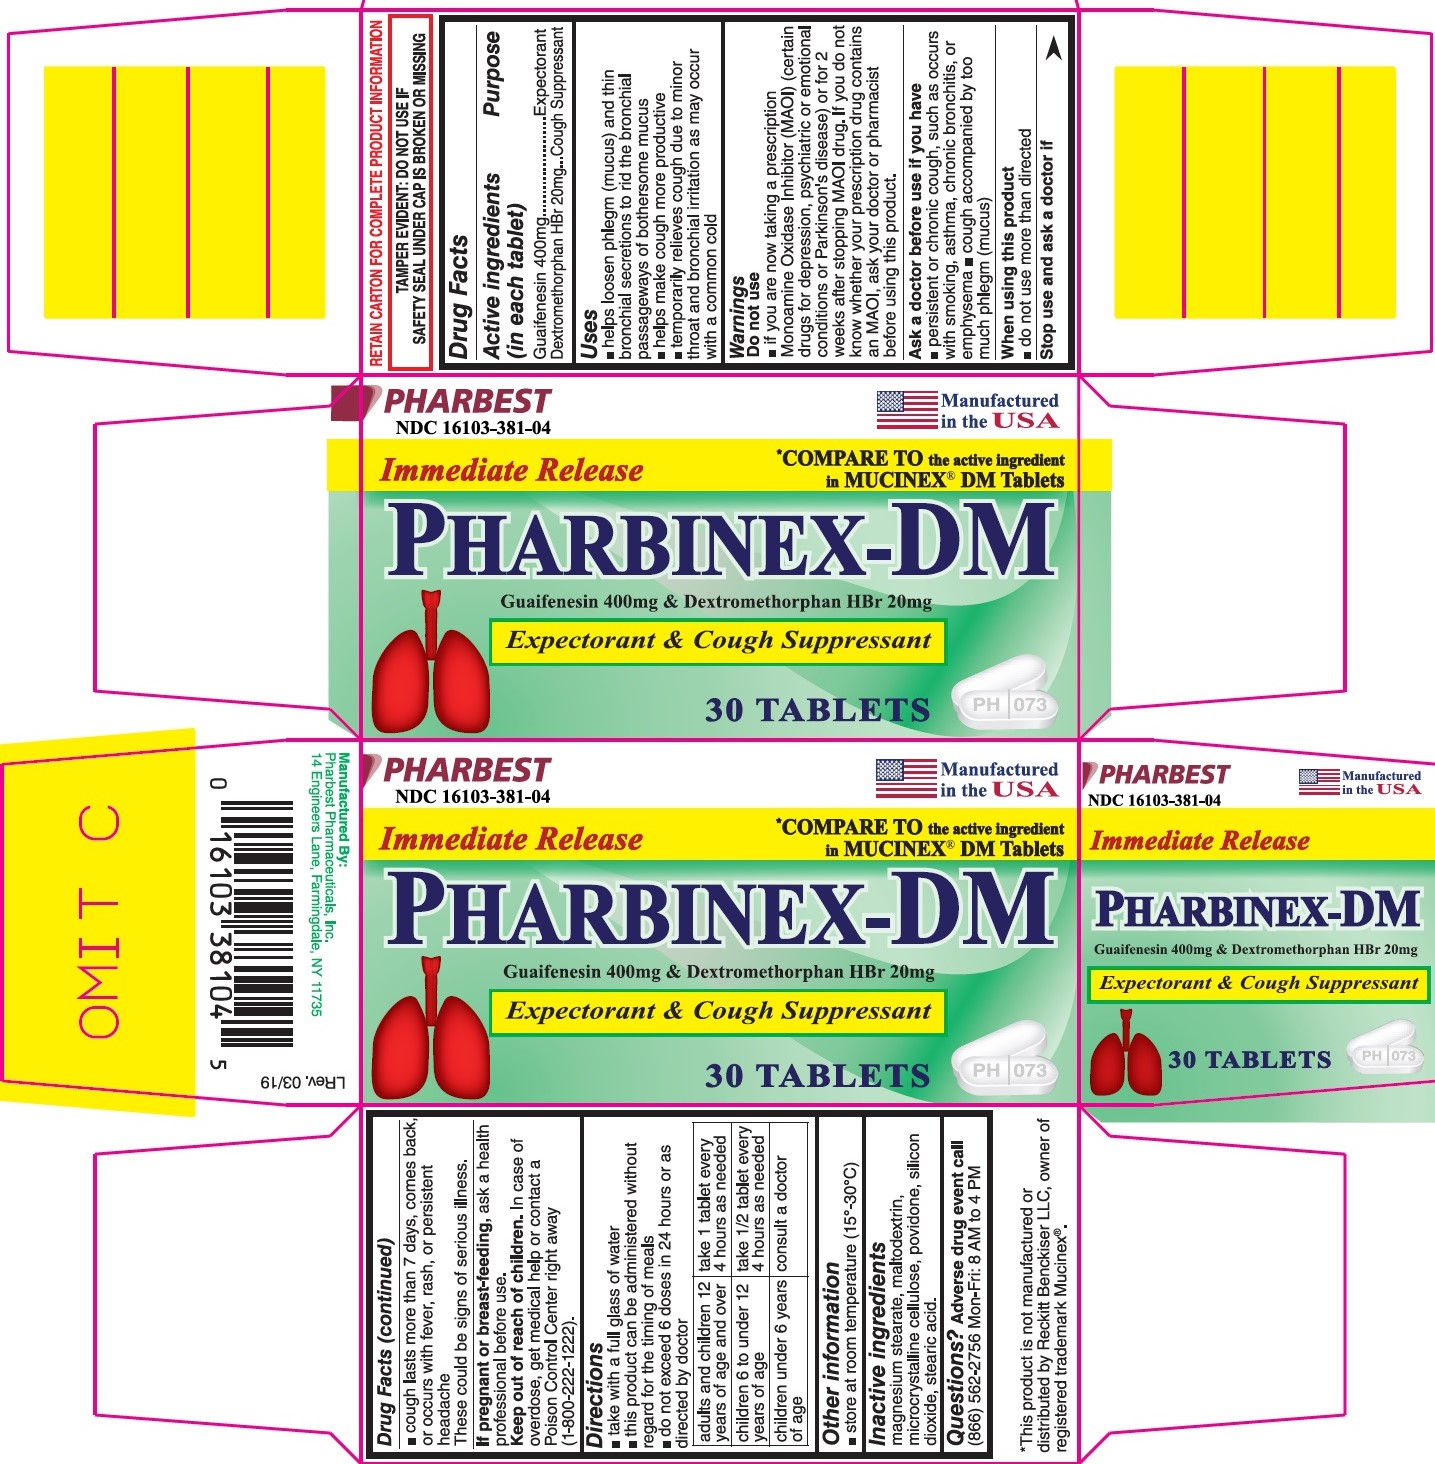 Pharbinex DM Tablet Product Label Image.jpg